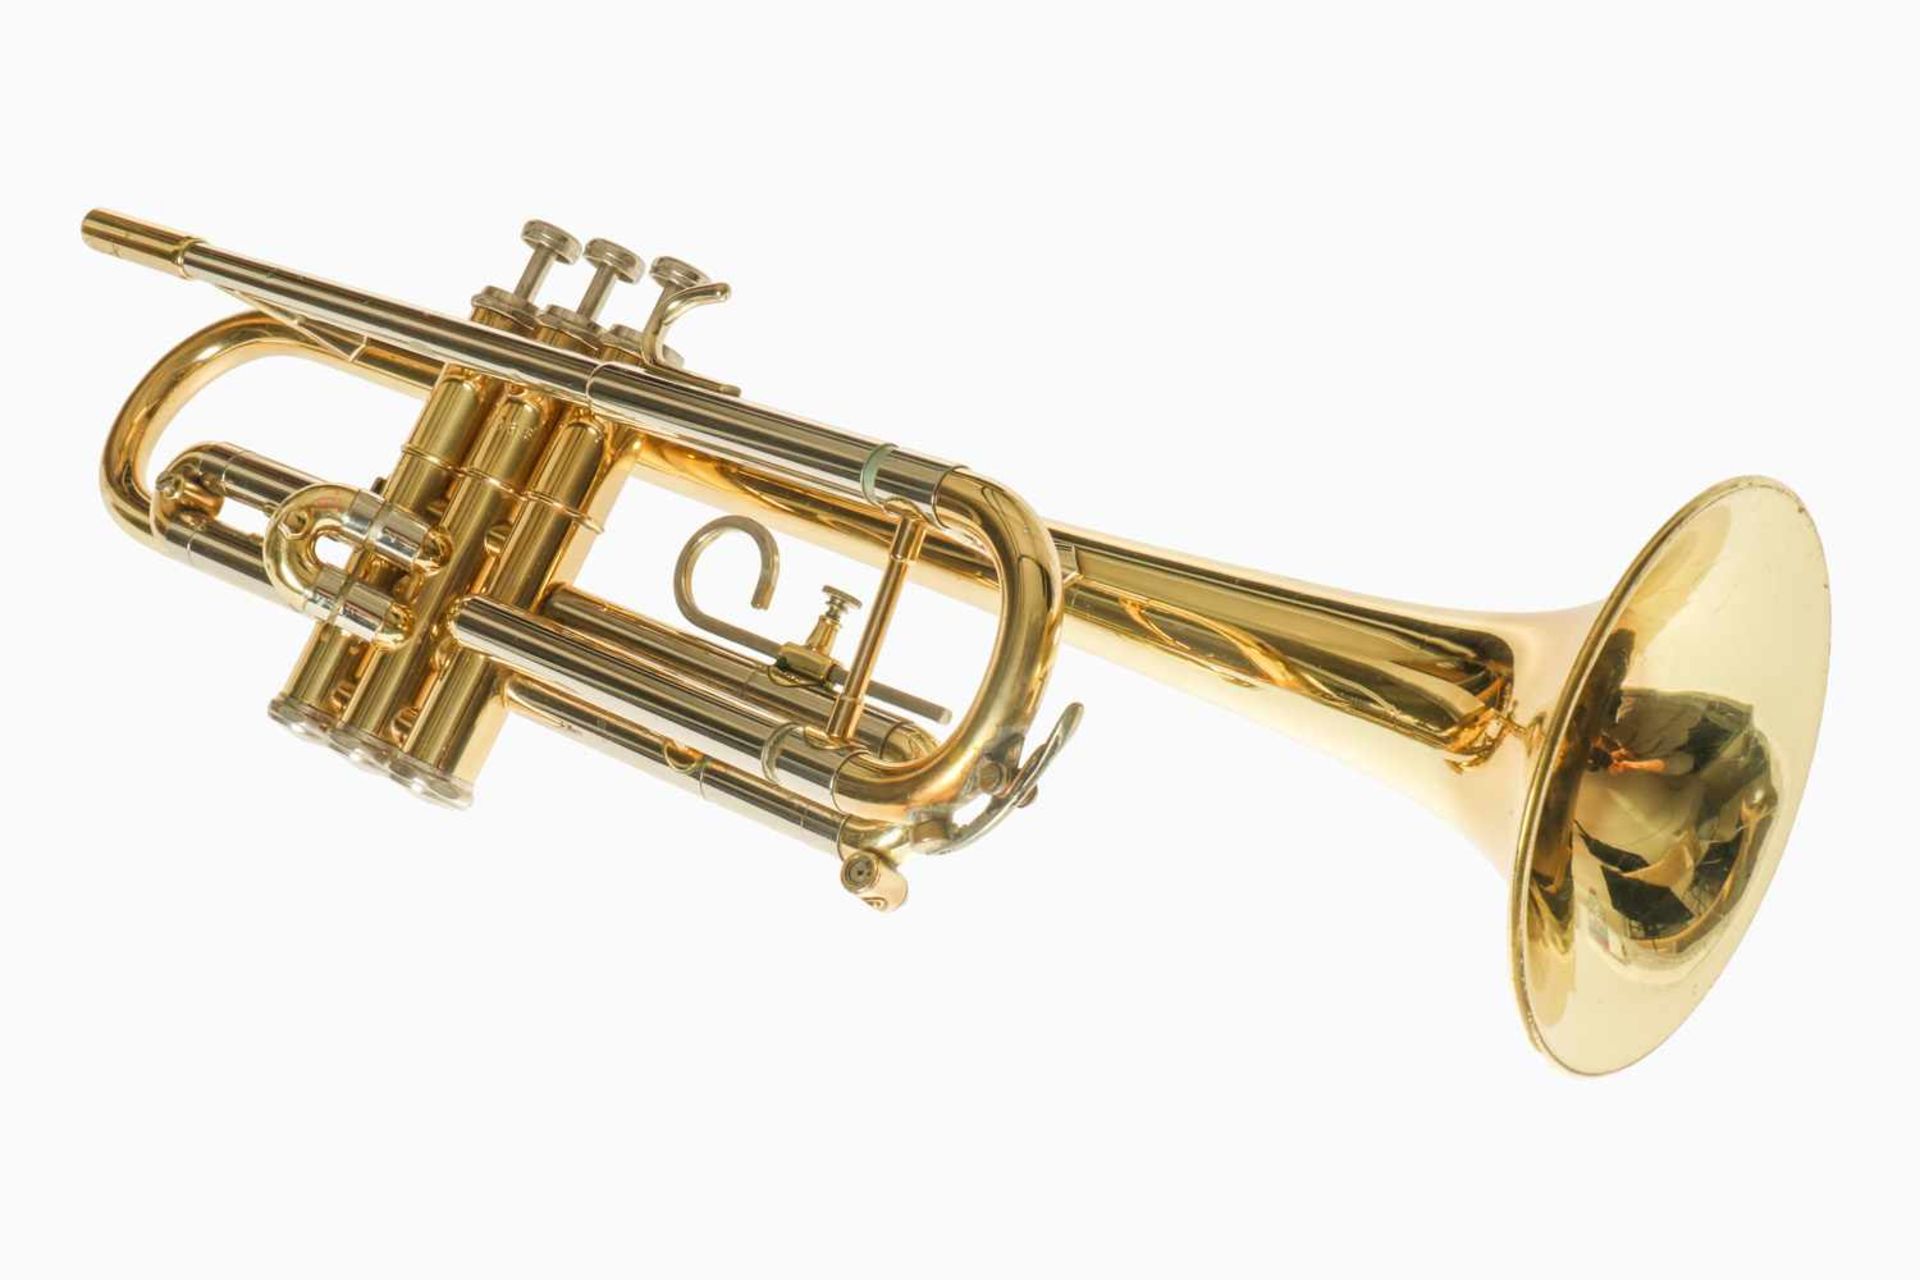 Getzen Trompete "Capri", Nr. A 44066, mit Perlmutt-Ventil-Drückern, dazu Original-Koffer mit